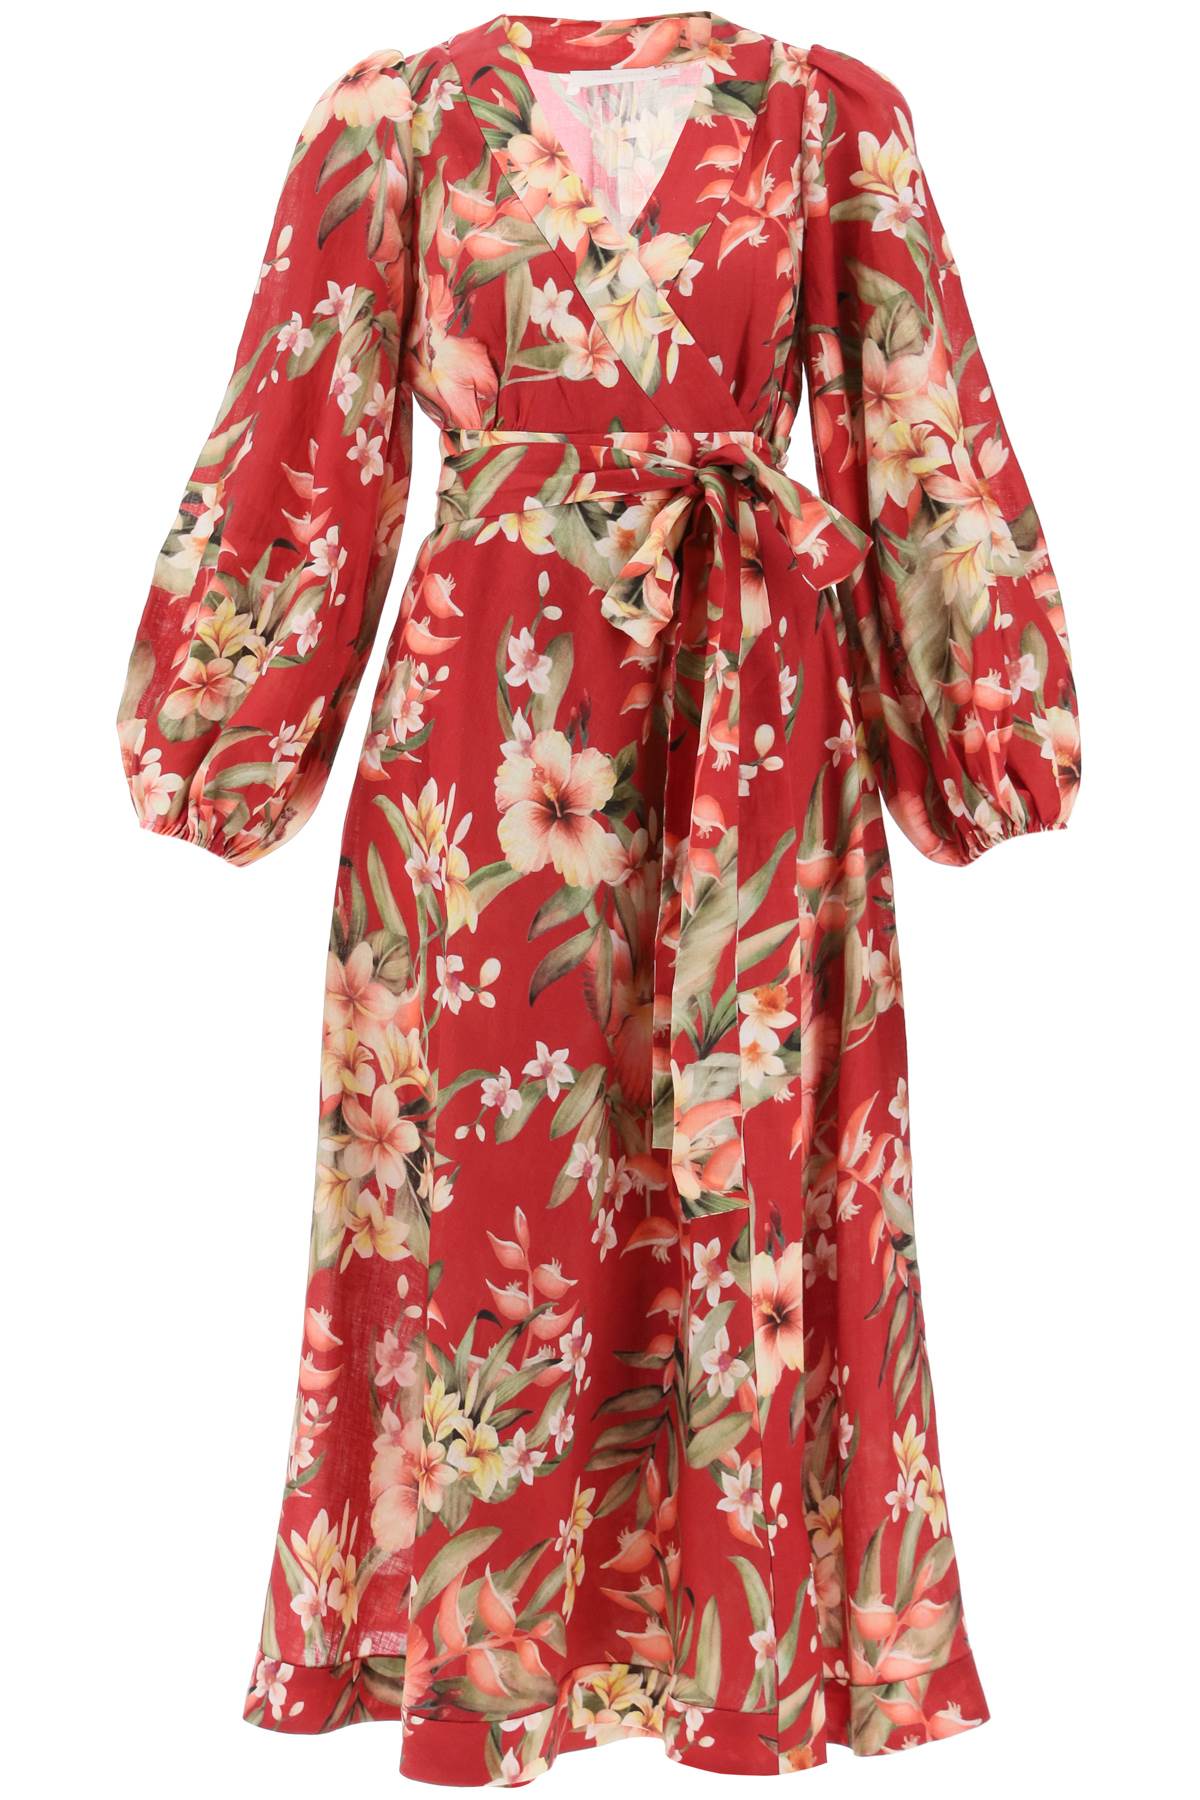 Zimmermann lexi wrap dress with floral pattern-0